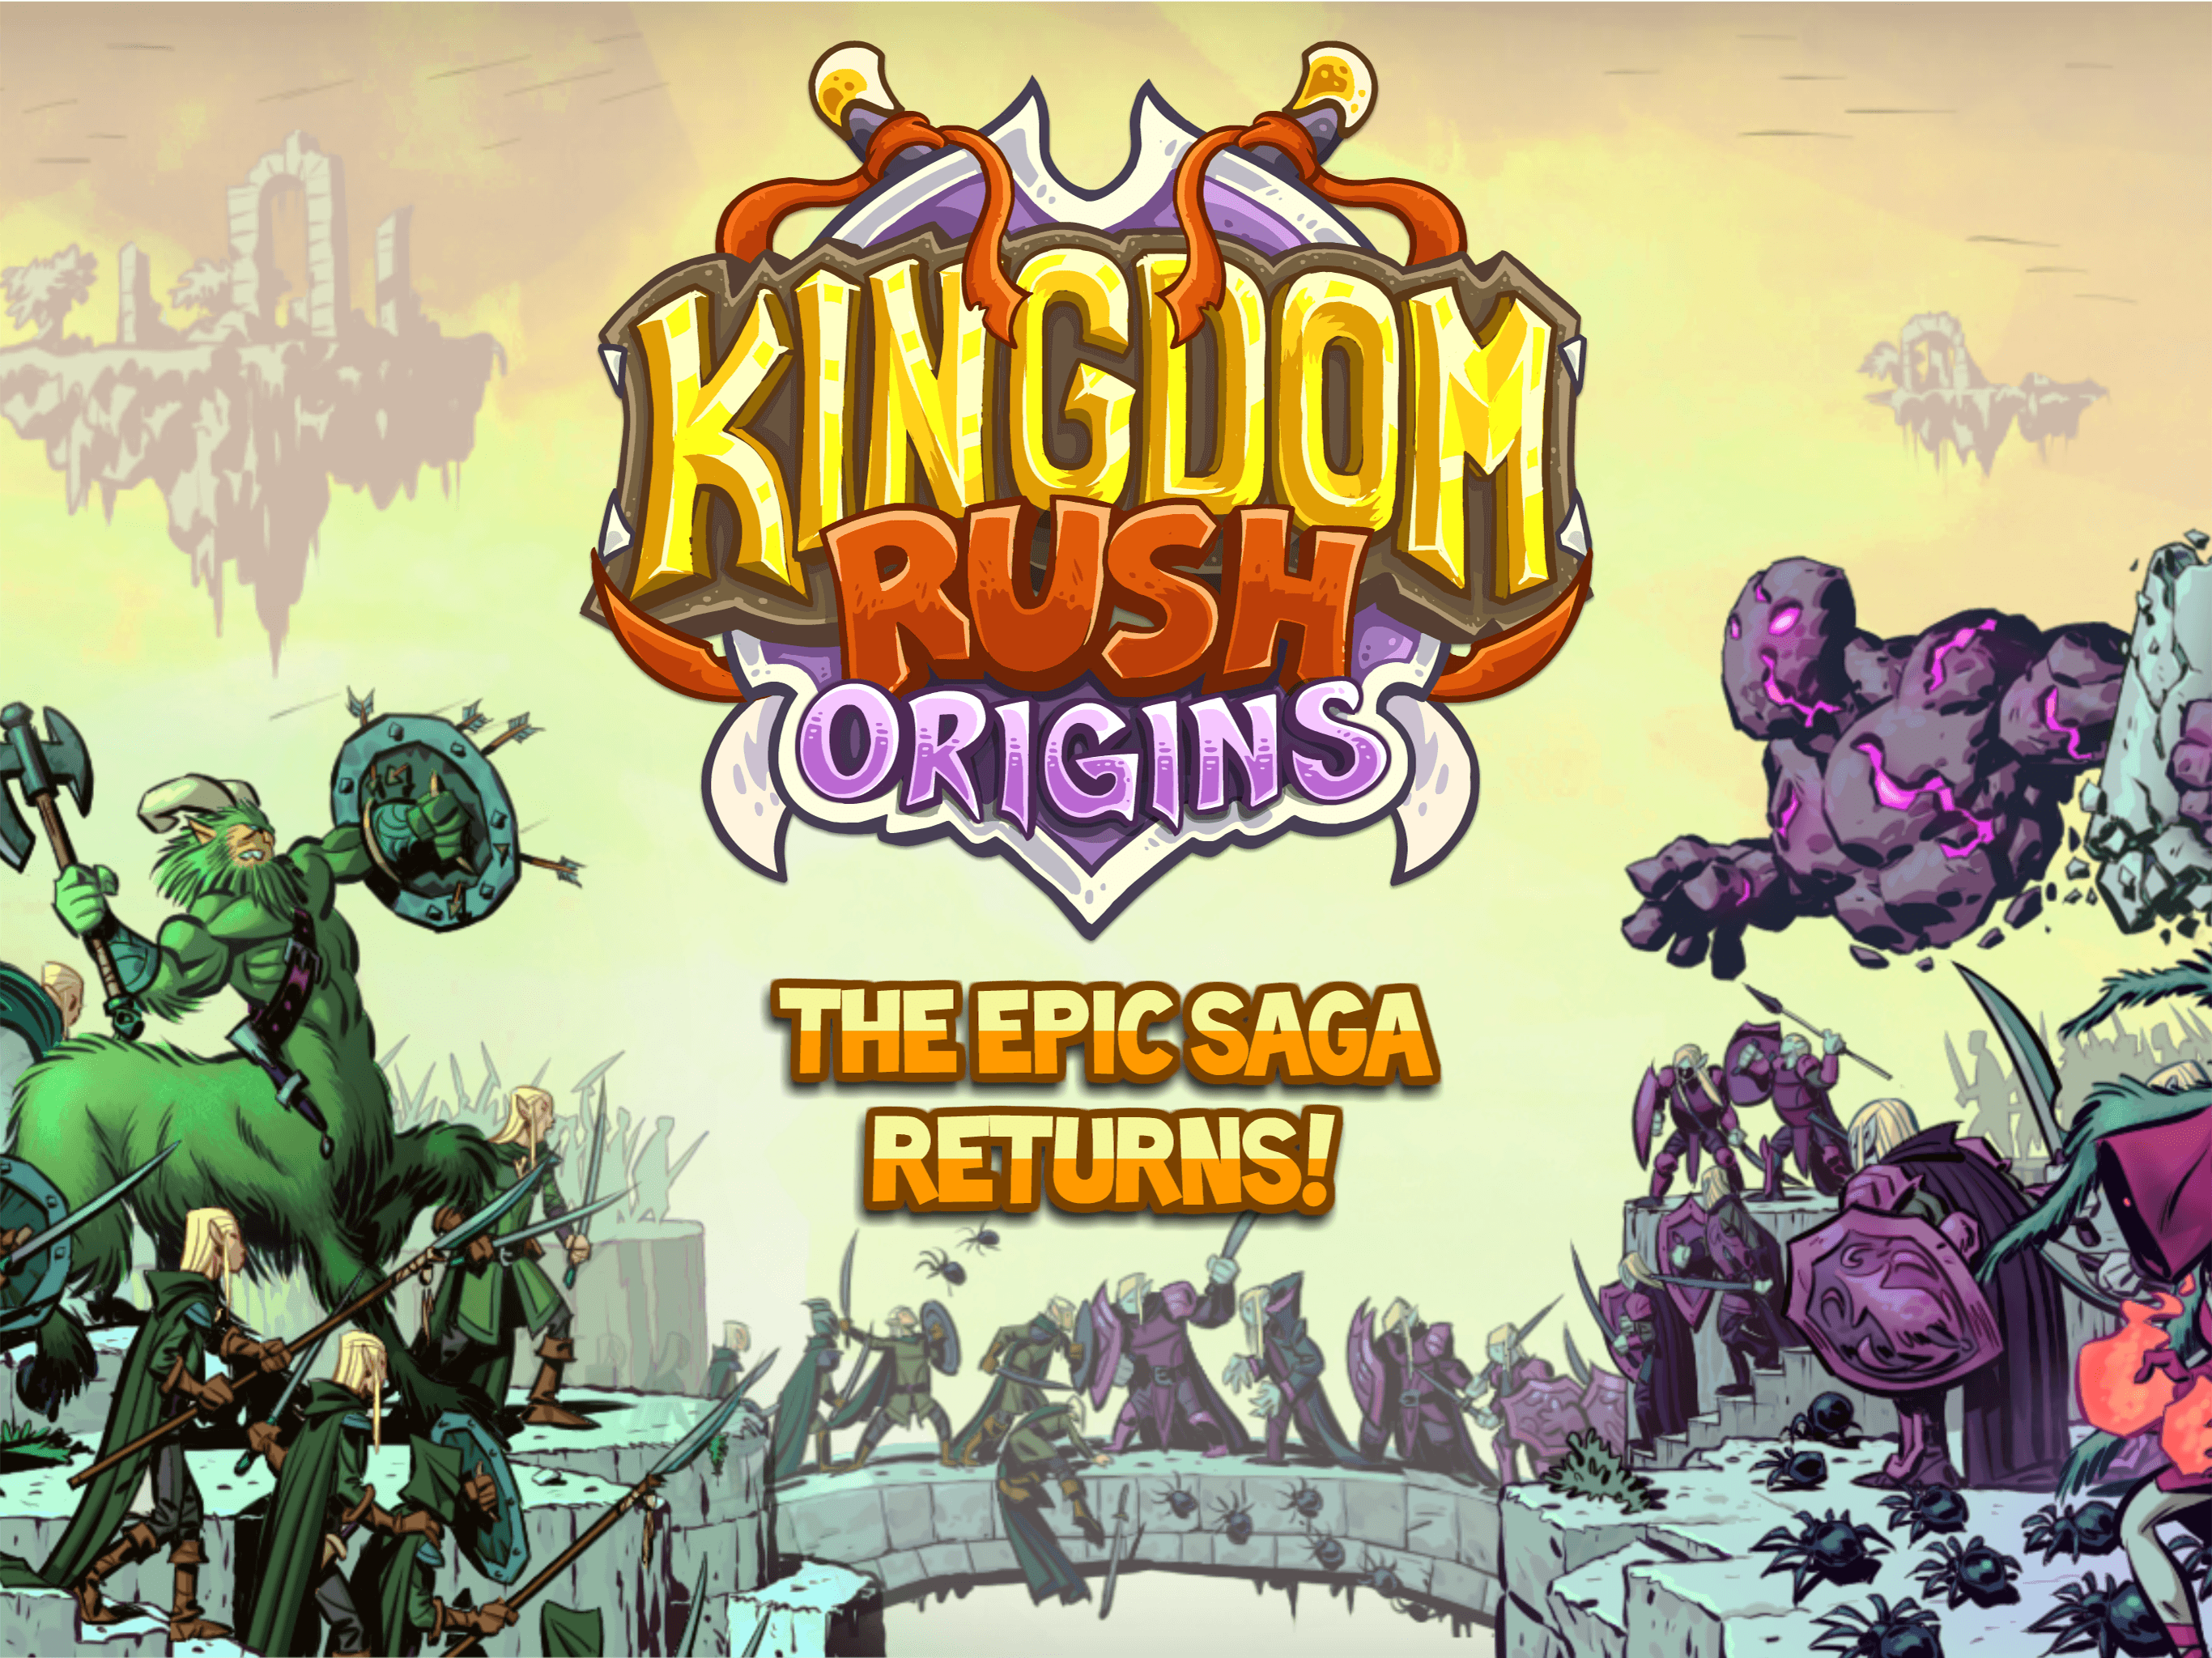 Kingdom rush origins online